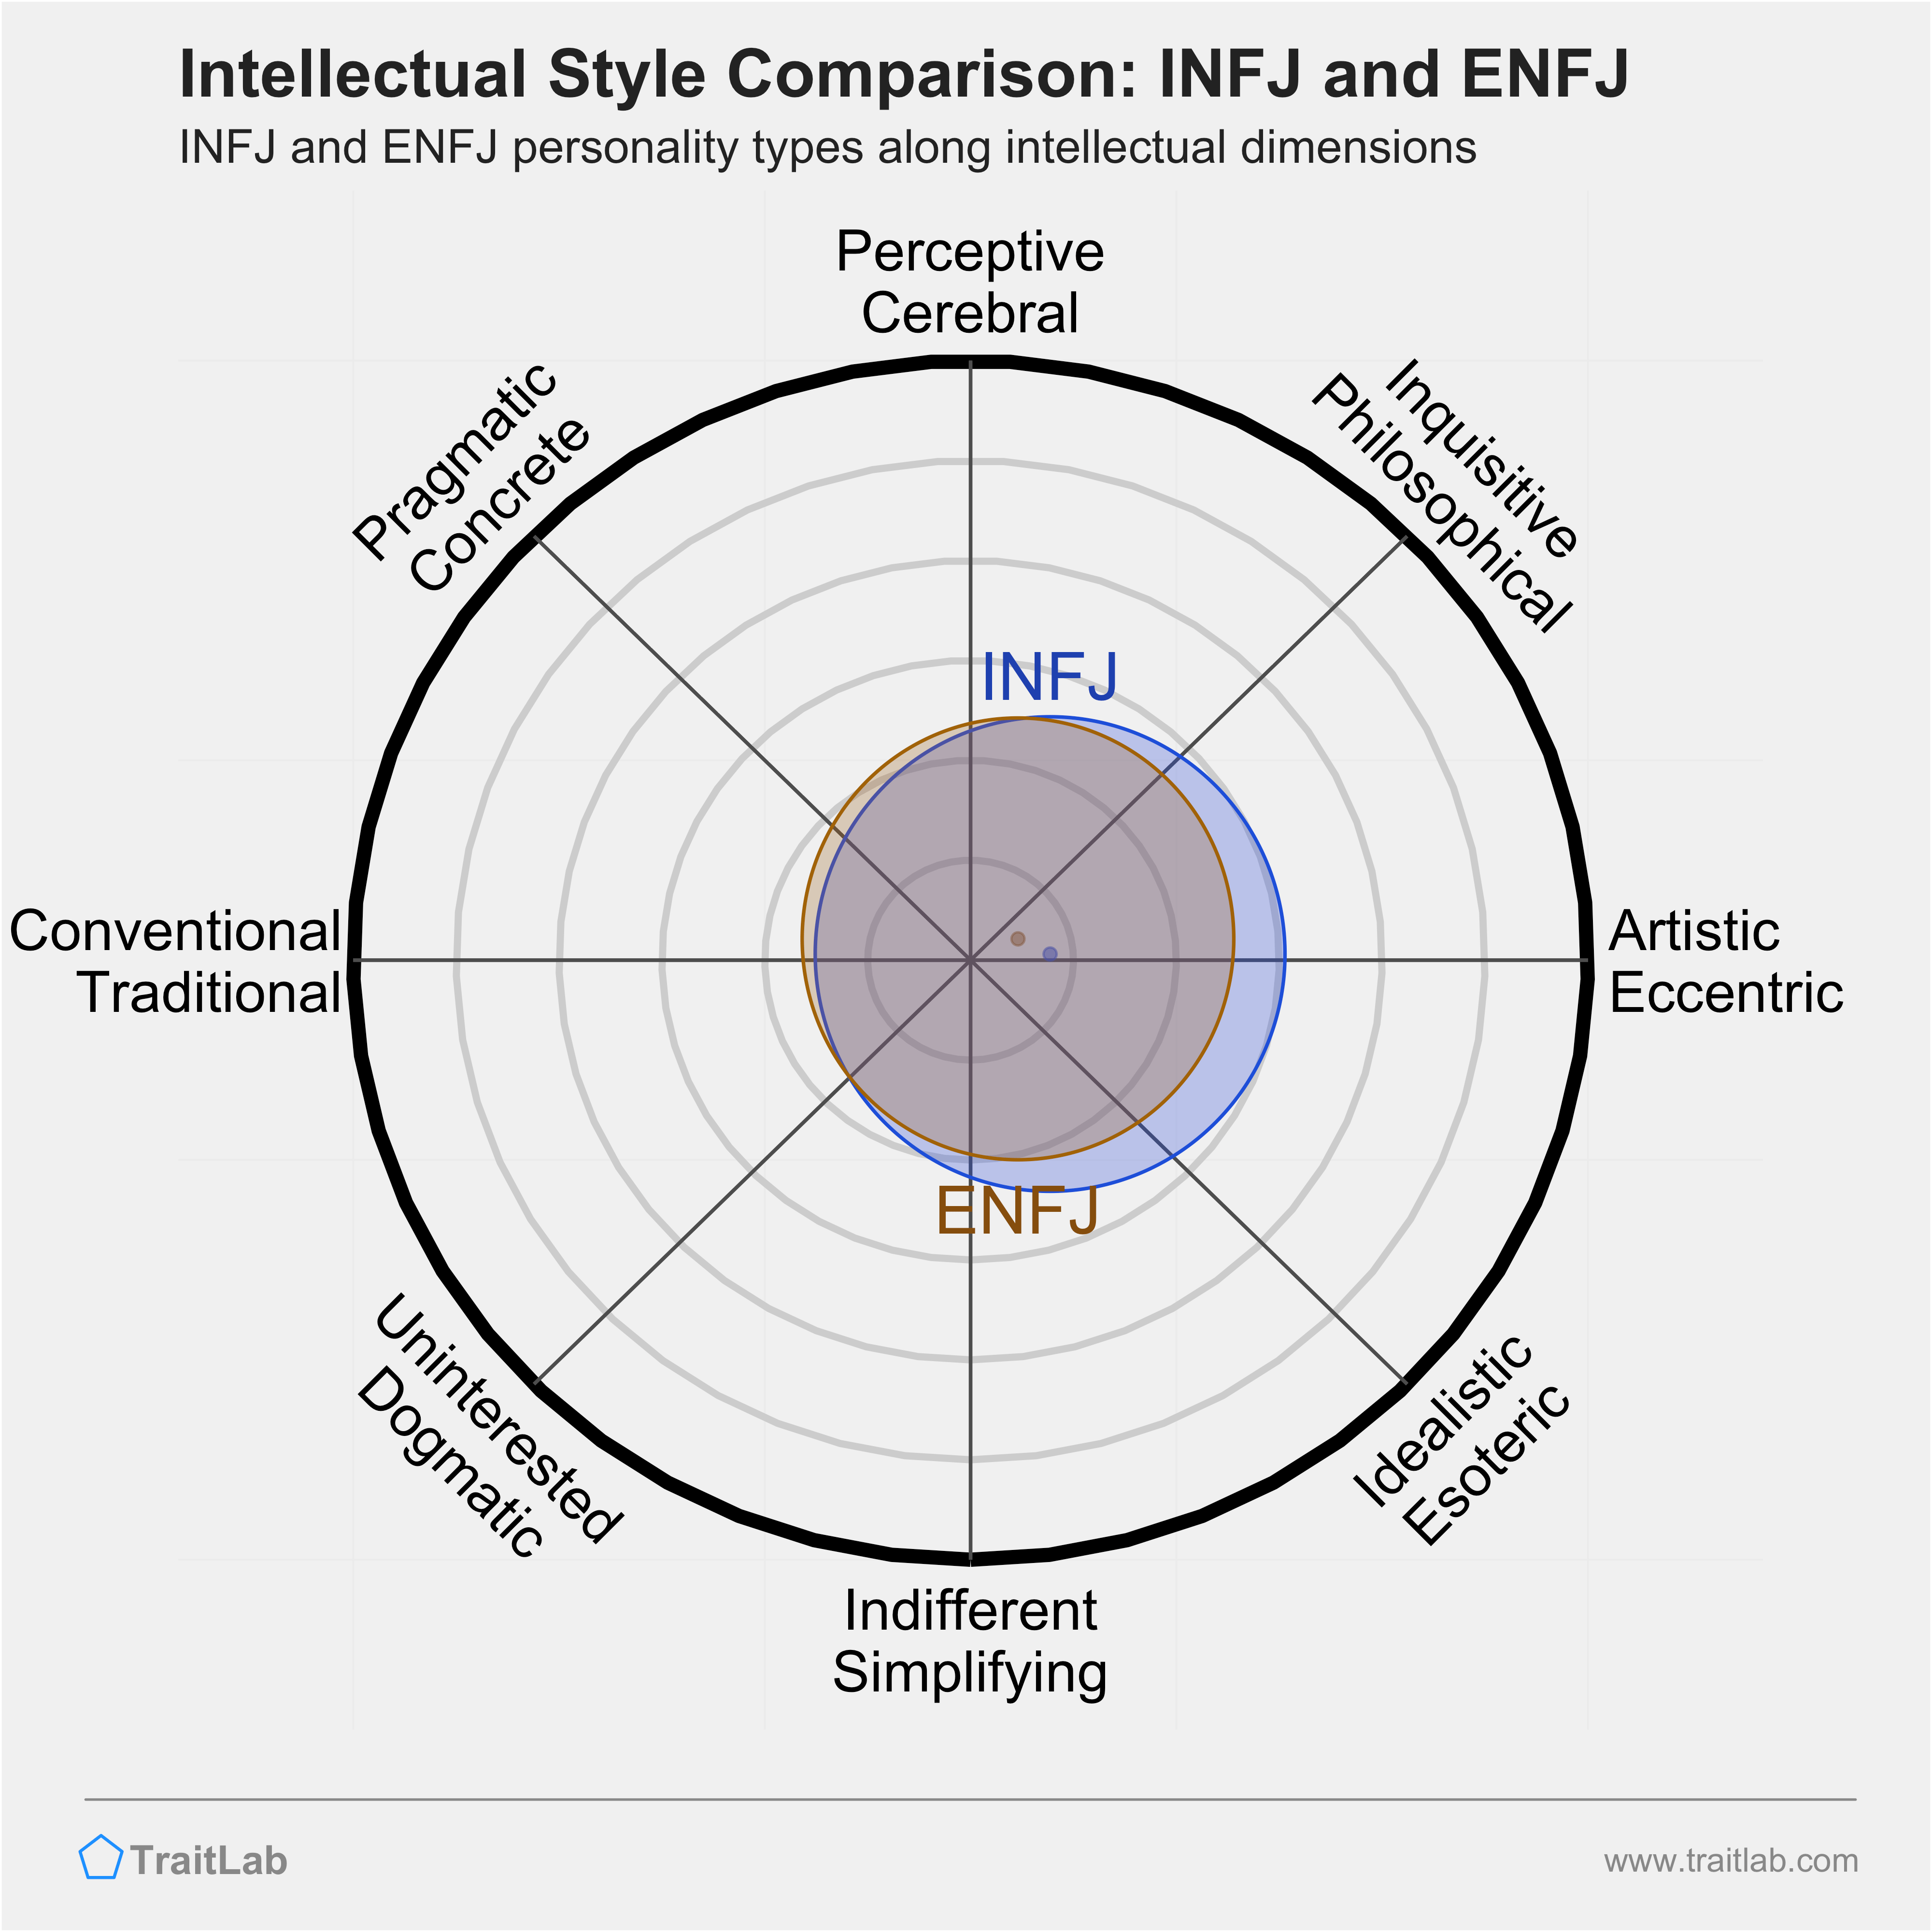 INFJ and ENFJ comparison across intellectual dimensions